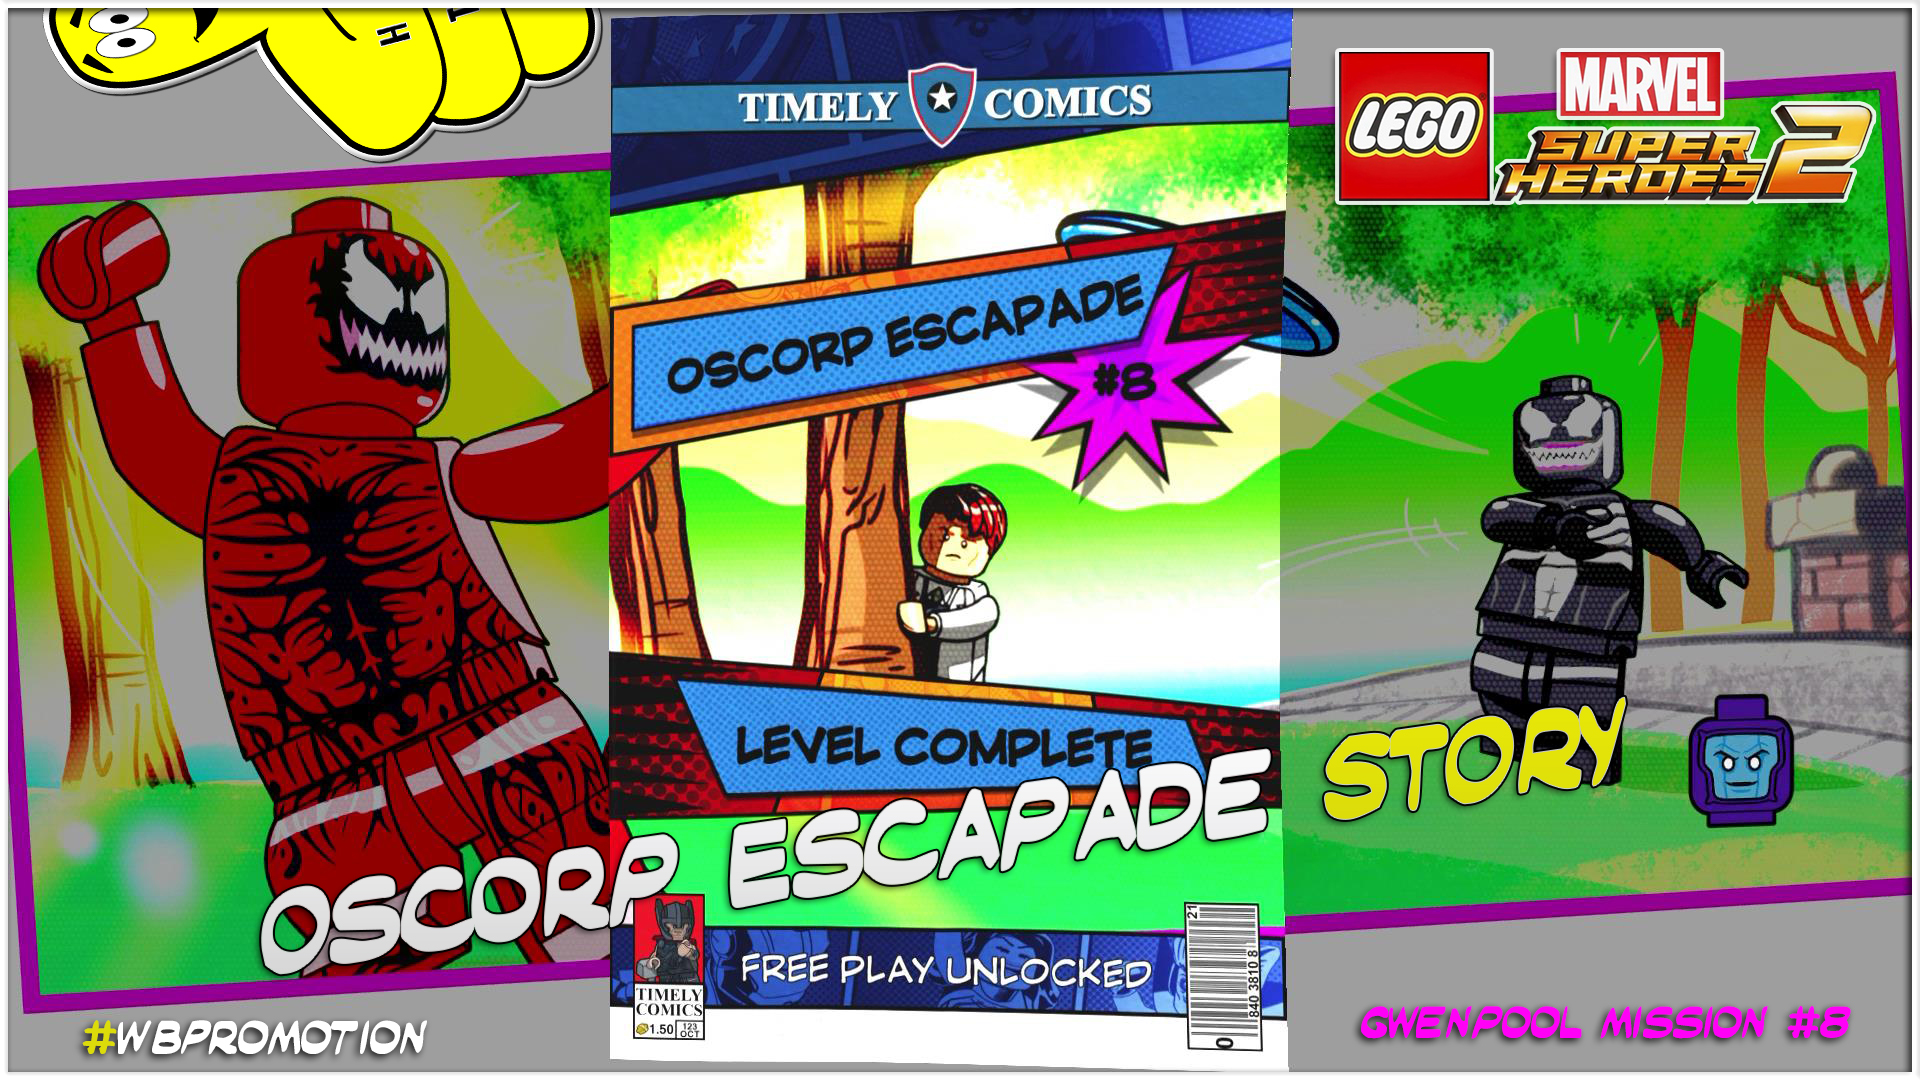 Lego Marvel Superheroes 2: Gwenpool Mission 8 / Oscorp Escapade STORY – HTG